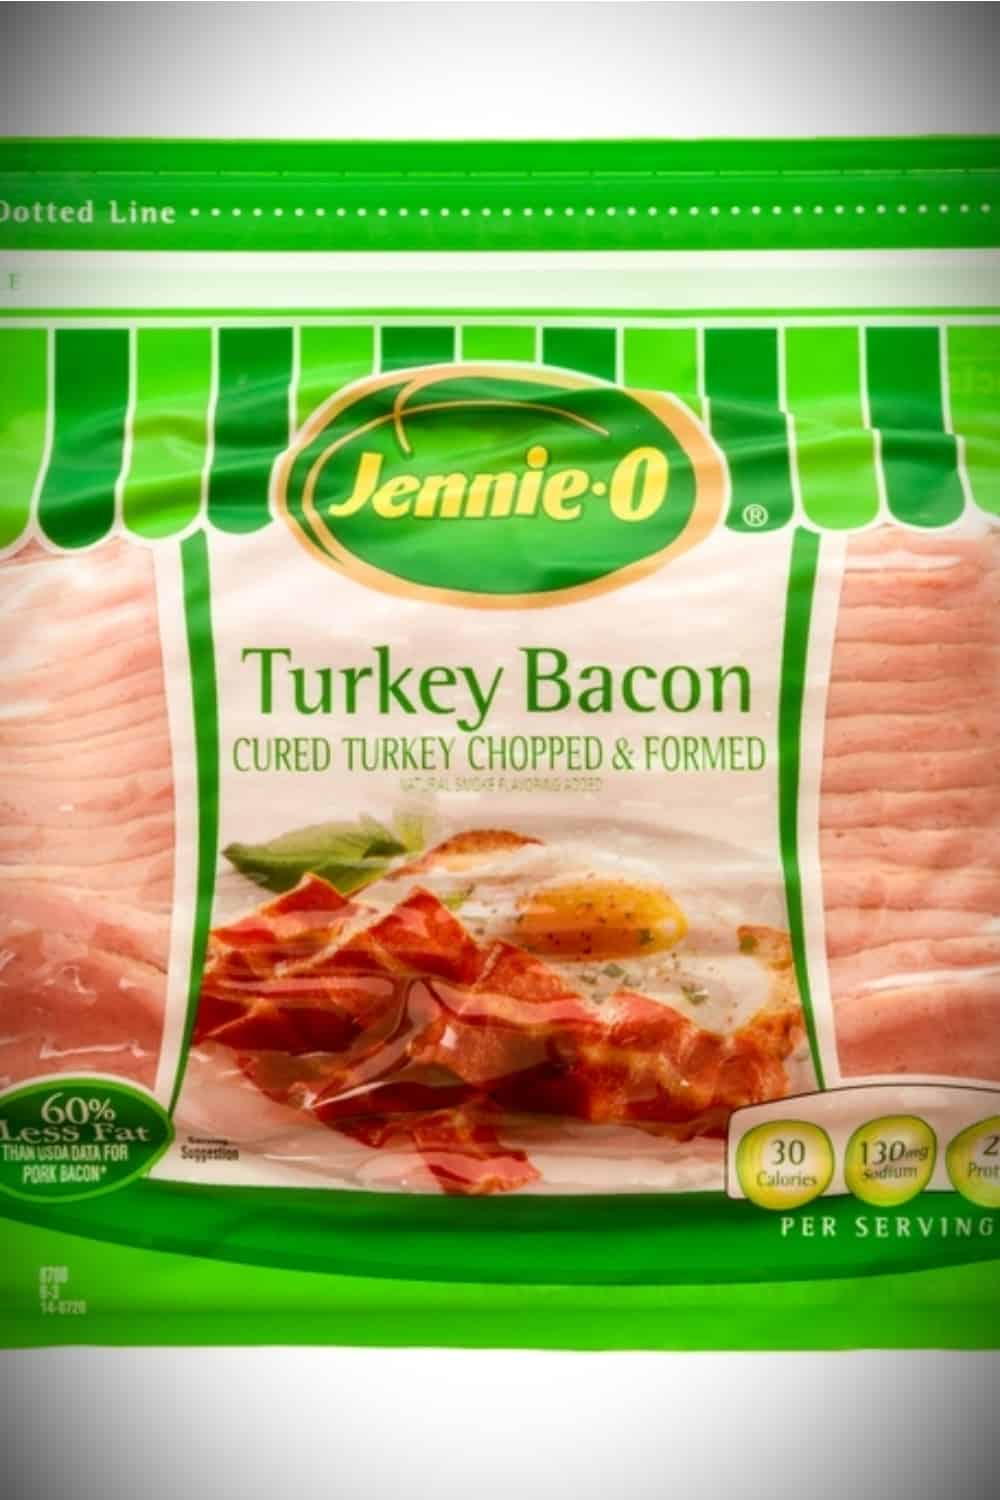 A package of Jennie-o turkey bacon